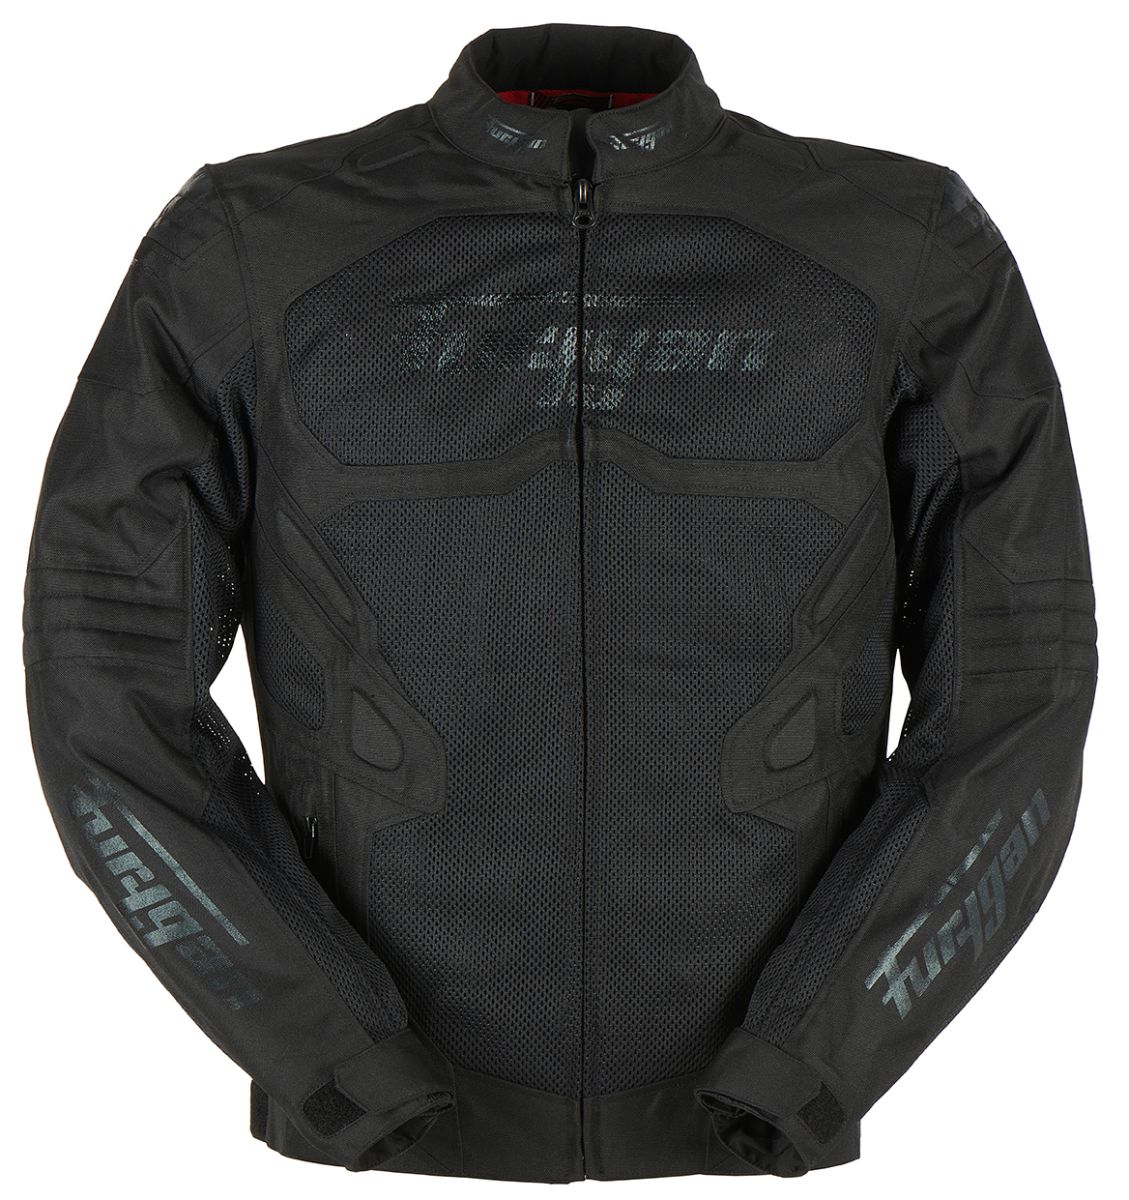 Image of Furygan Atom Vented Evo Jacket Black Size 2XL ID 3435980347253